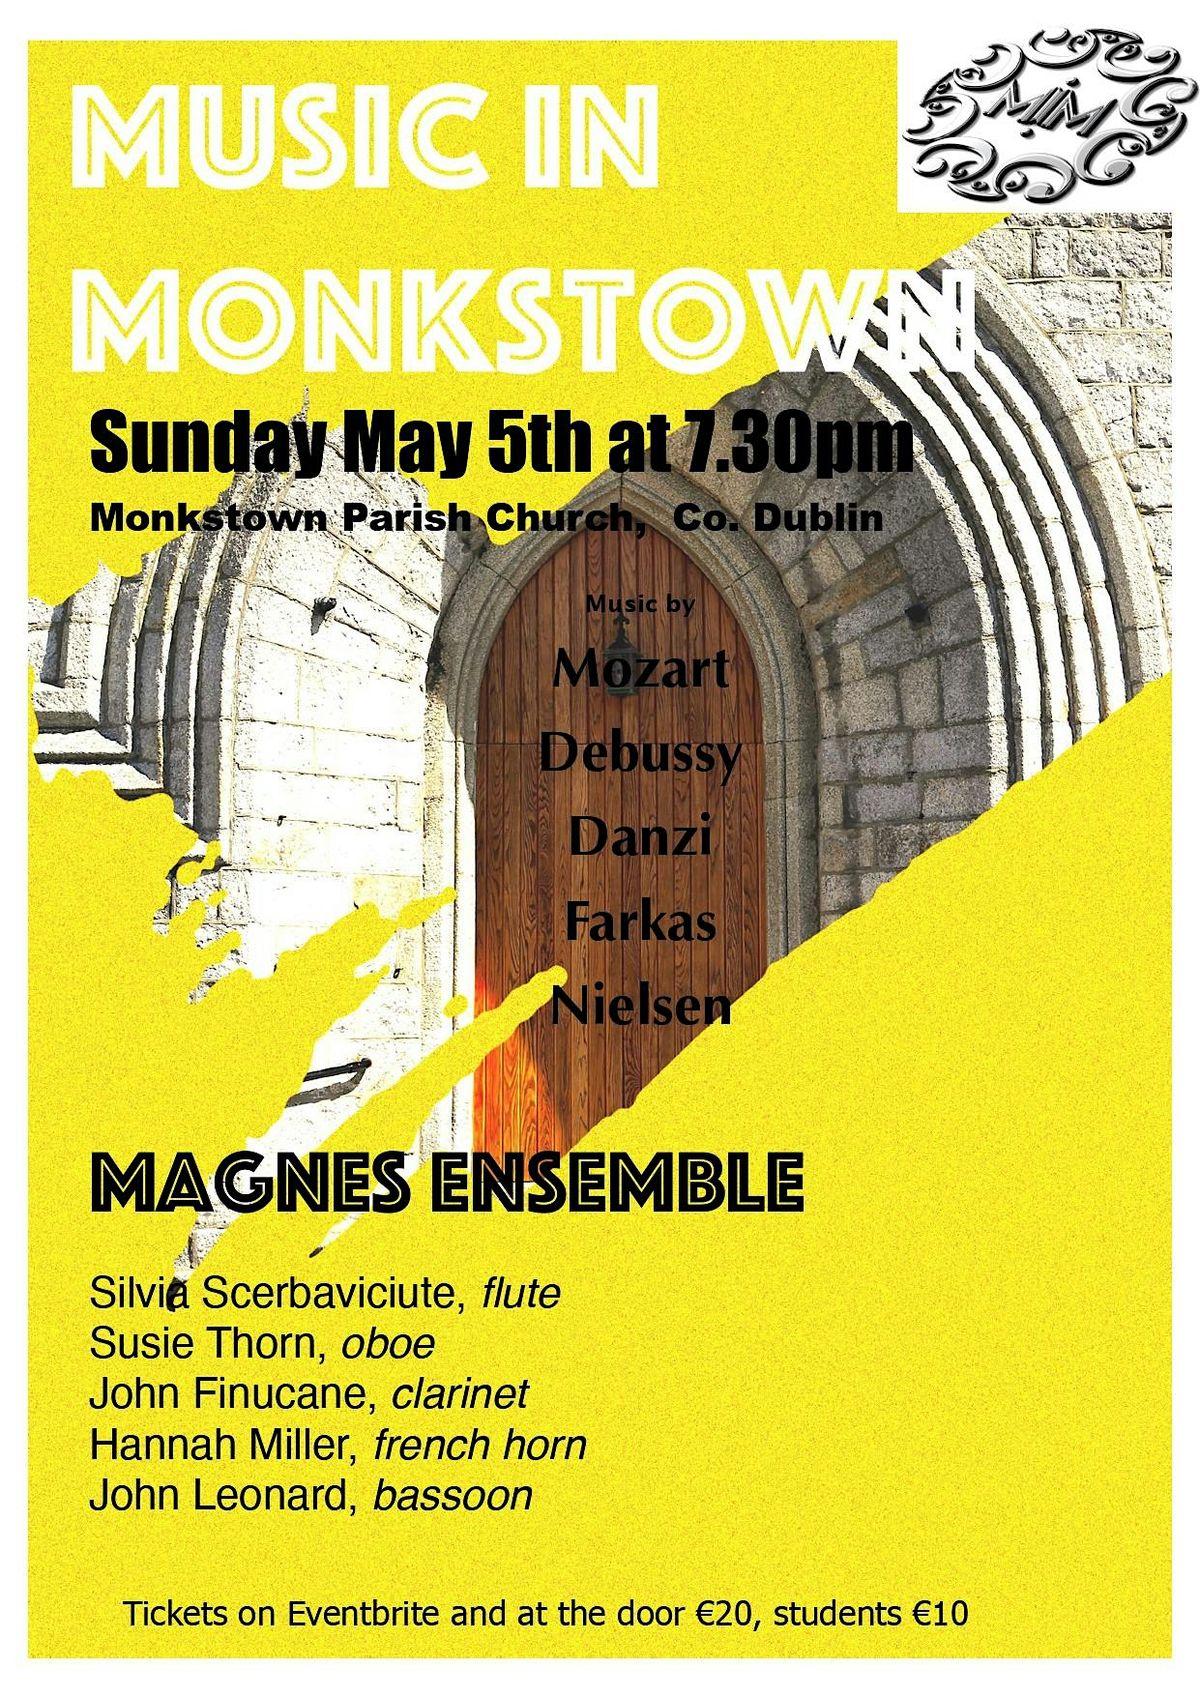 Music in Monkstown - Magnes Ensemble - Evening Concert